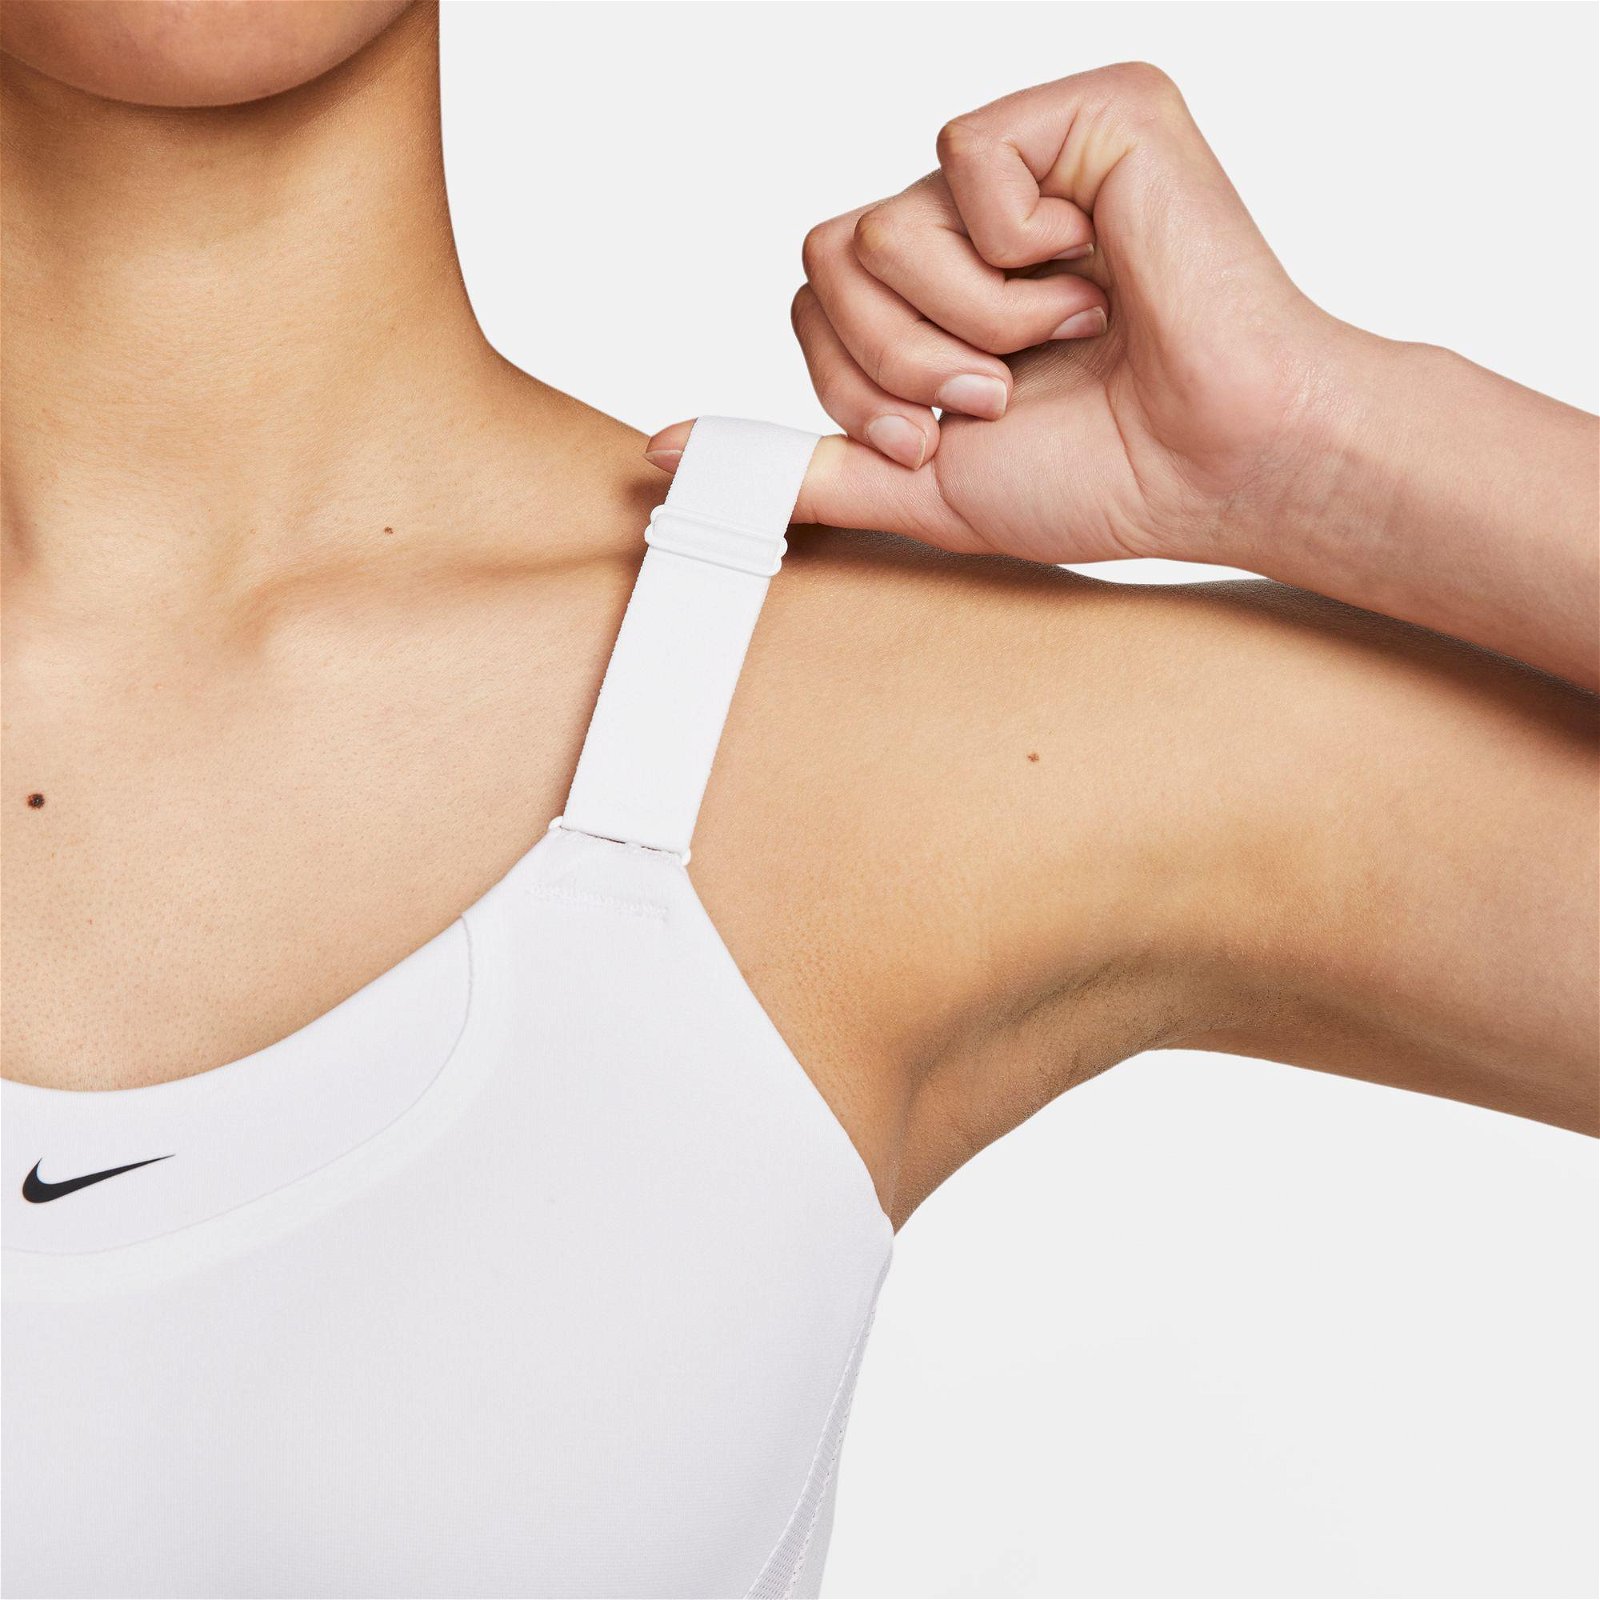 Nike Dri-FIT Alpha Kadın Beyaz Bra